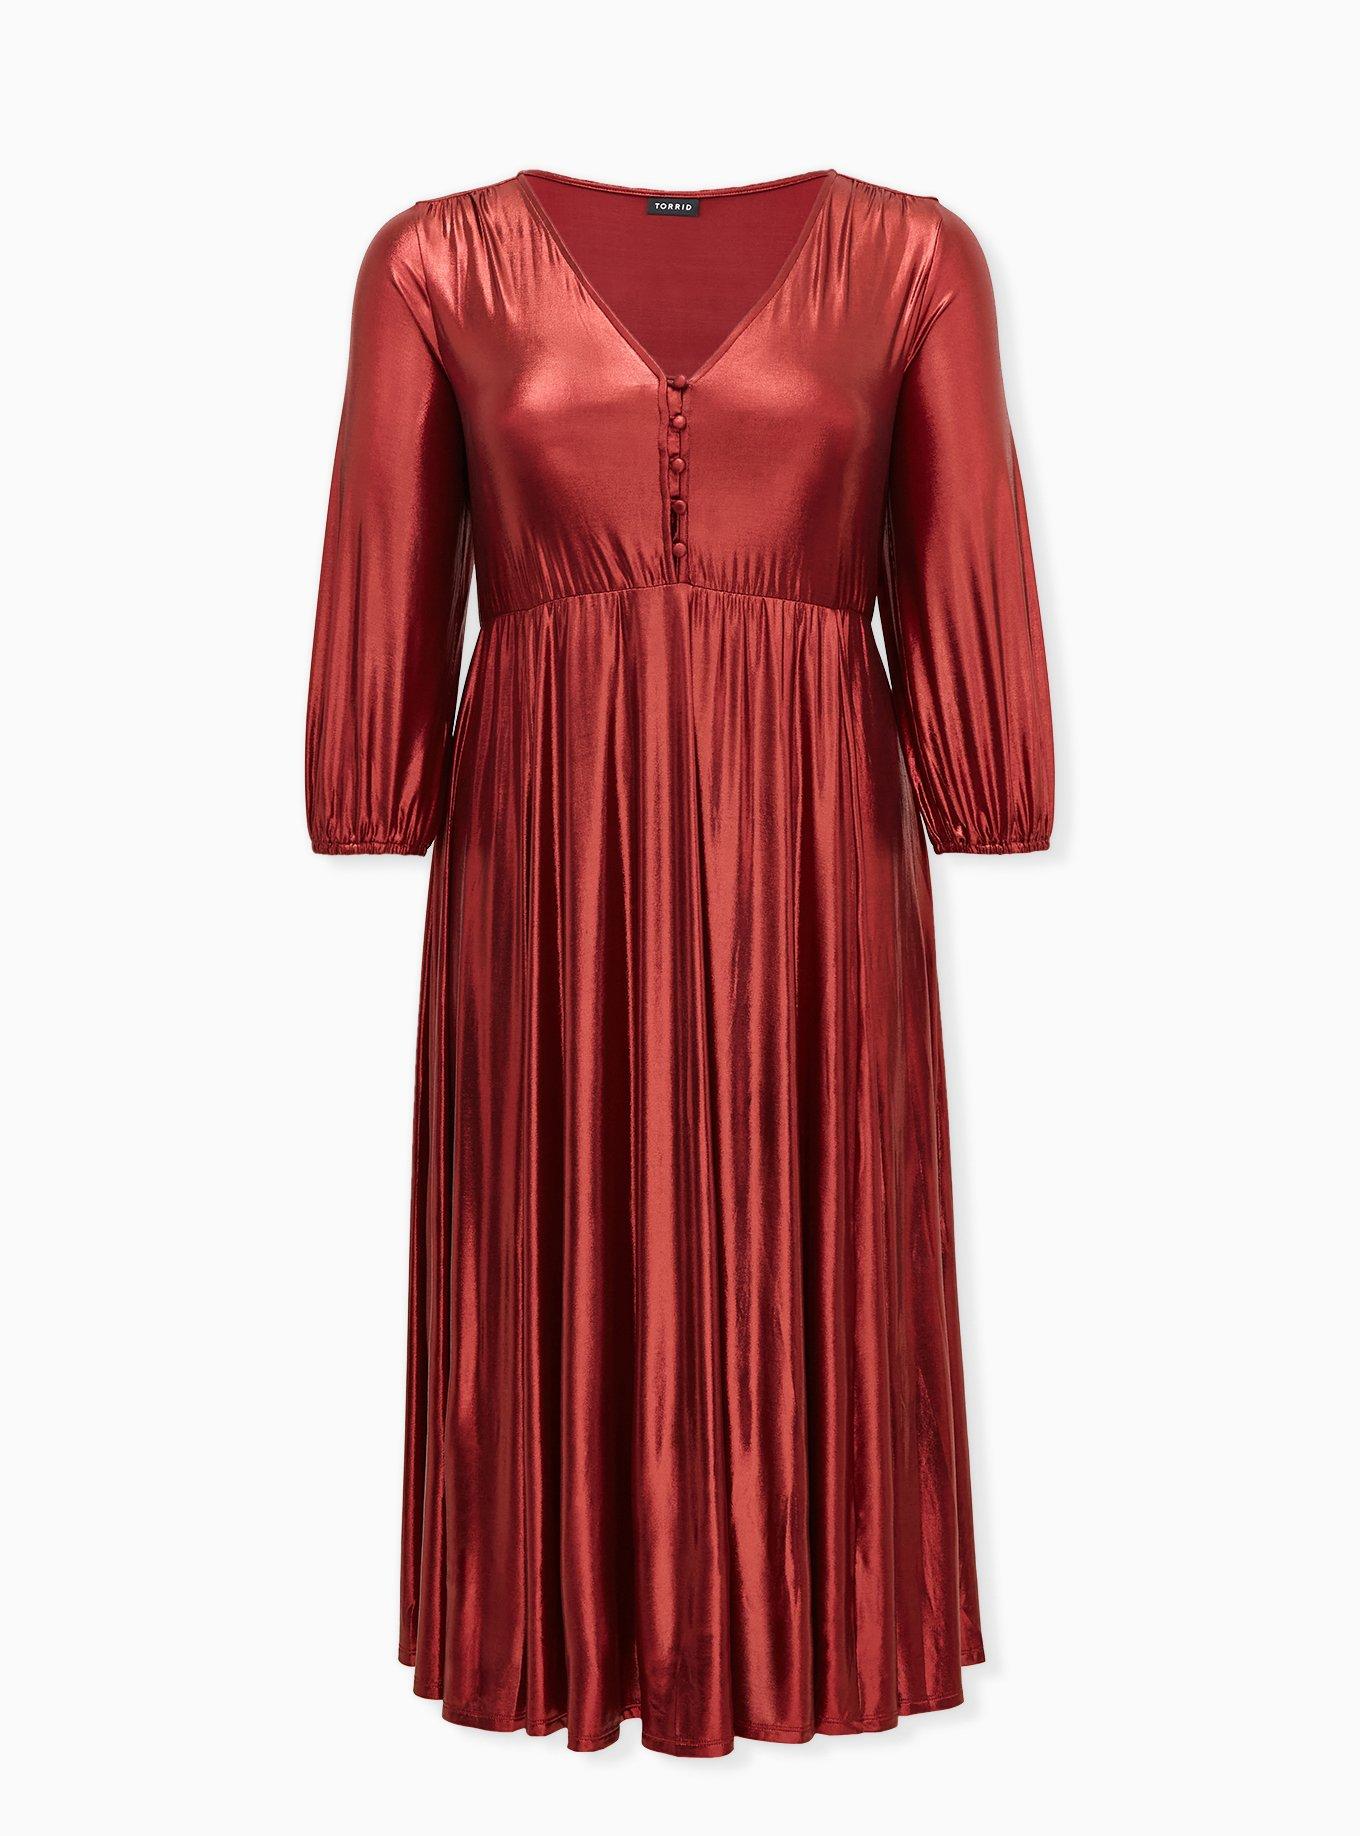 Plus Size - Red Liquid Knit Tea Length Dress - Torrid